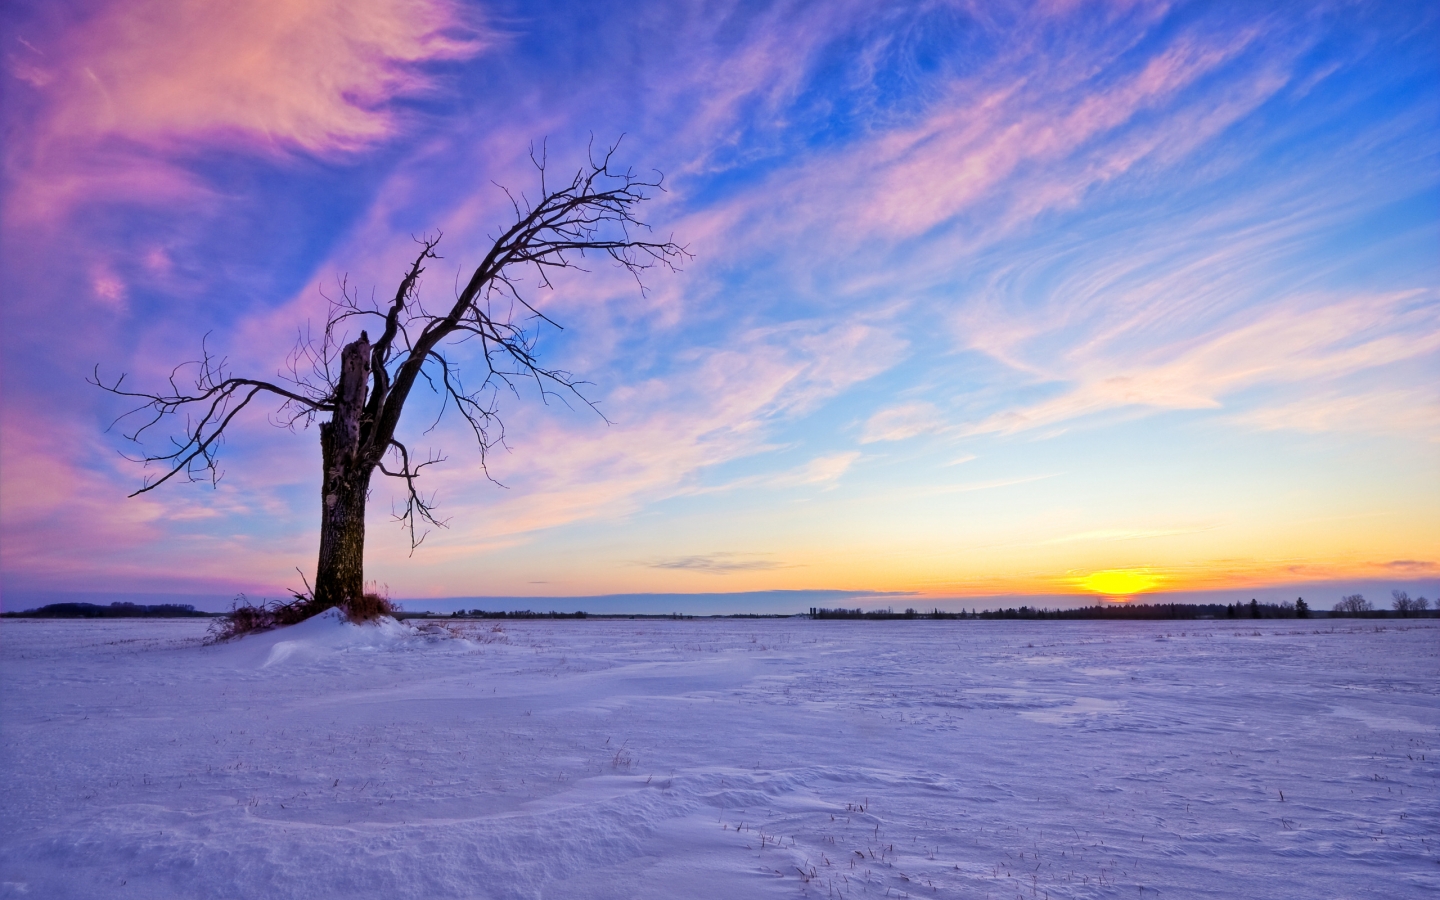 Beautiful Winter Sunset for 1440 x 900 widescreen resolution